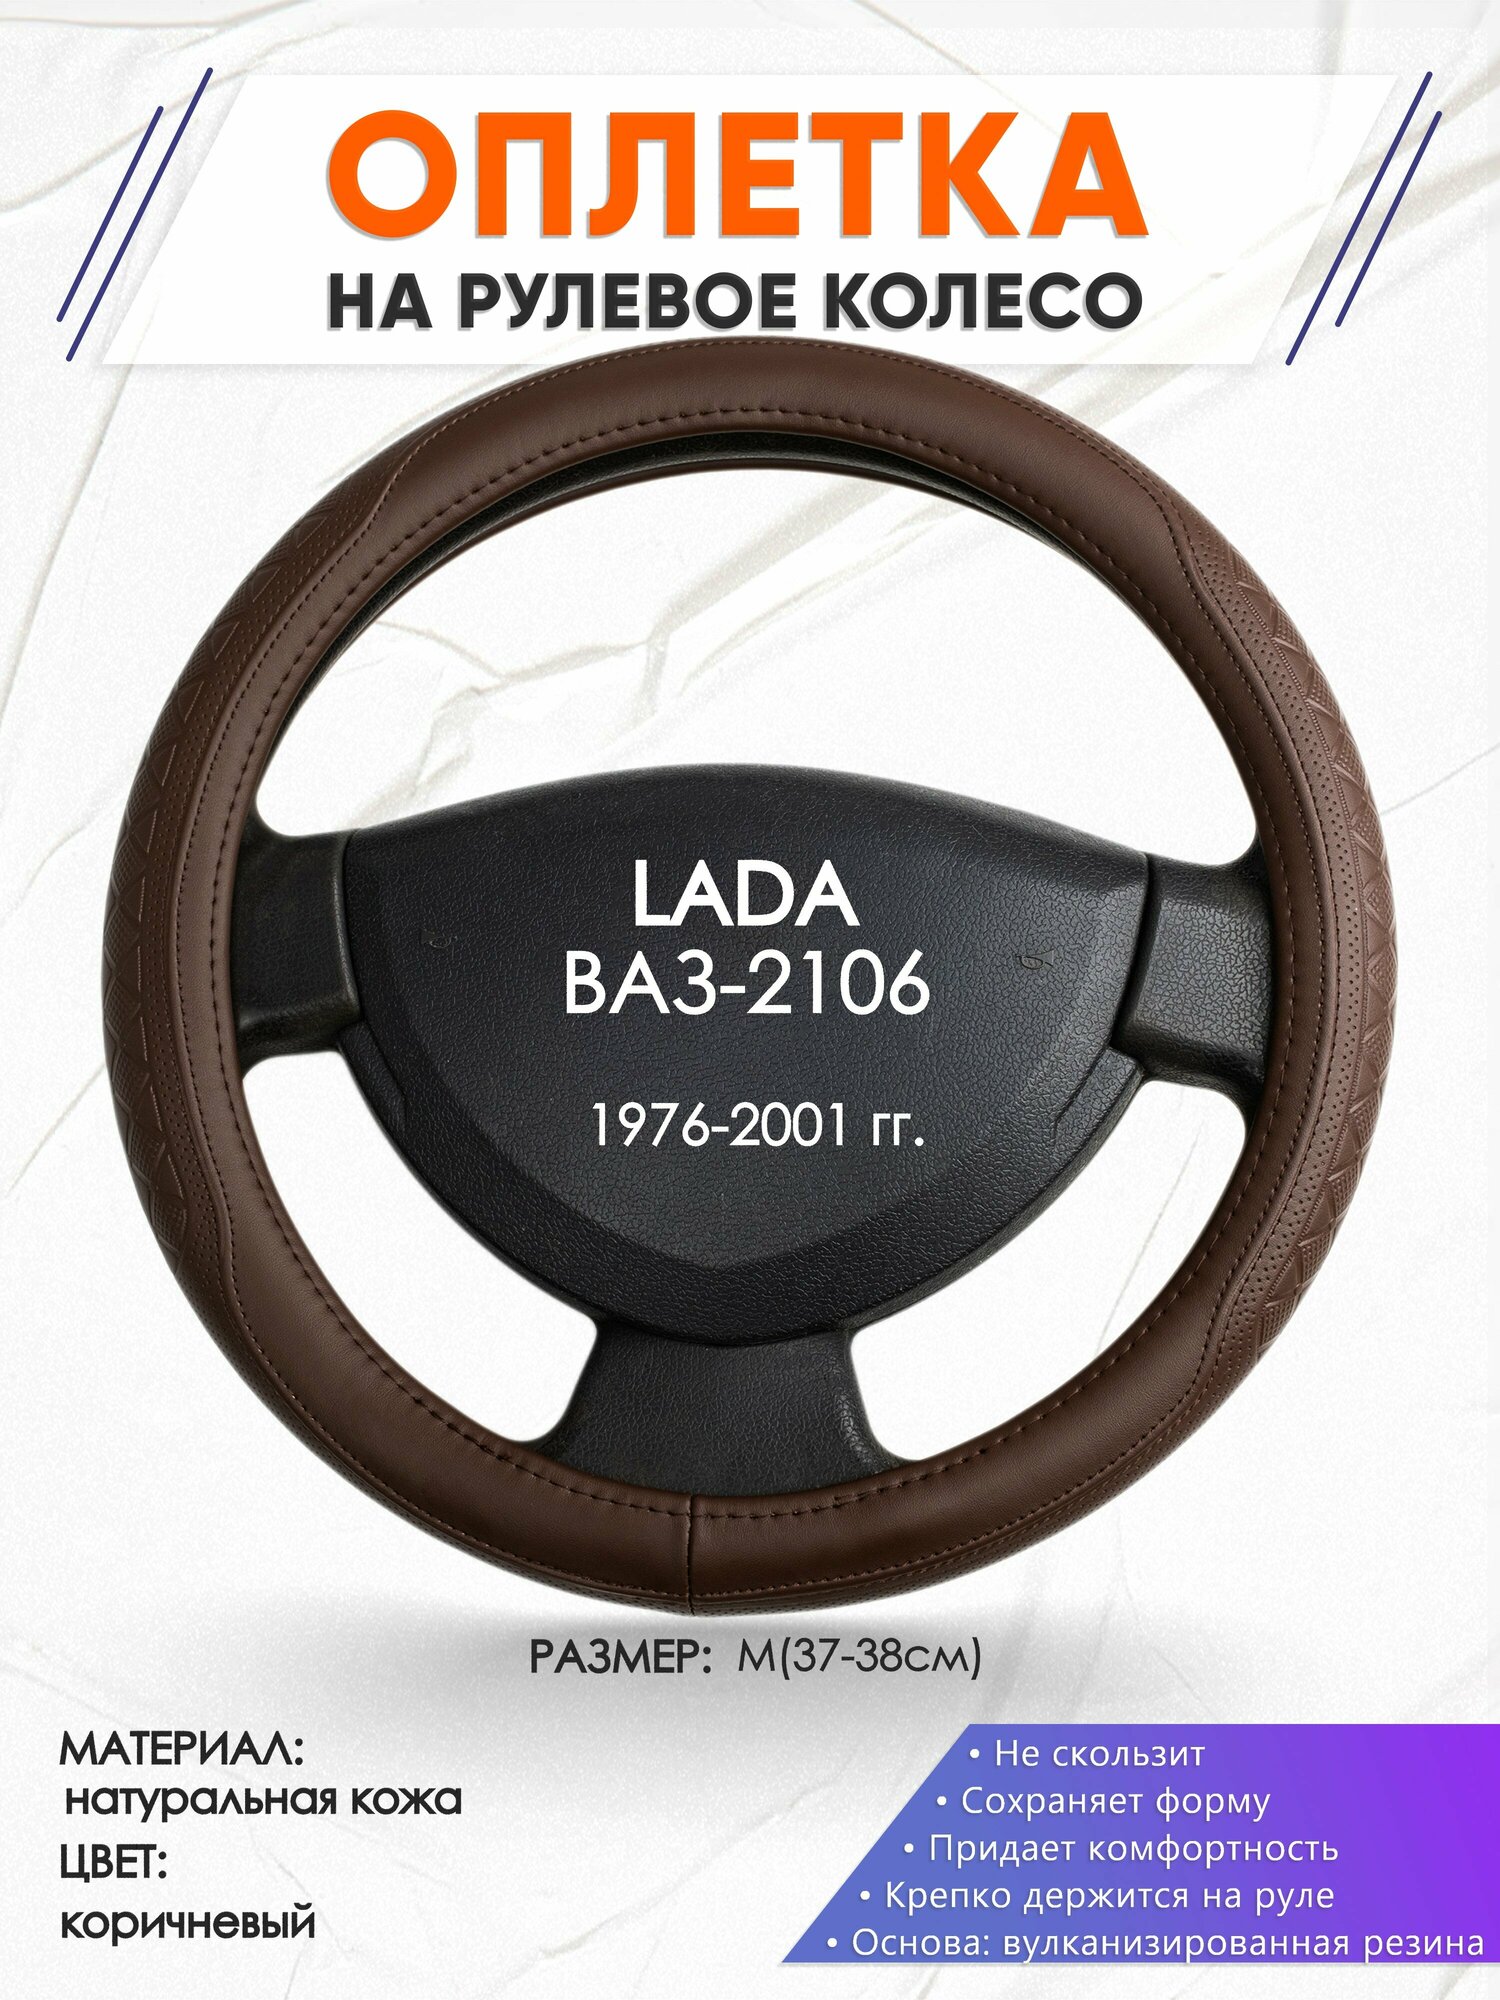 Оплетка наруль для LADA ВАЗ-2106(Лада ВАЗ-2106) 1976-2001 годов выпуска размер M(37-38см) Натуральная кожа 21